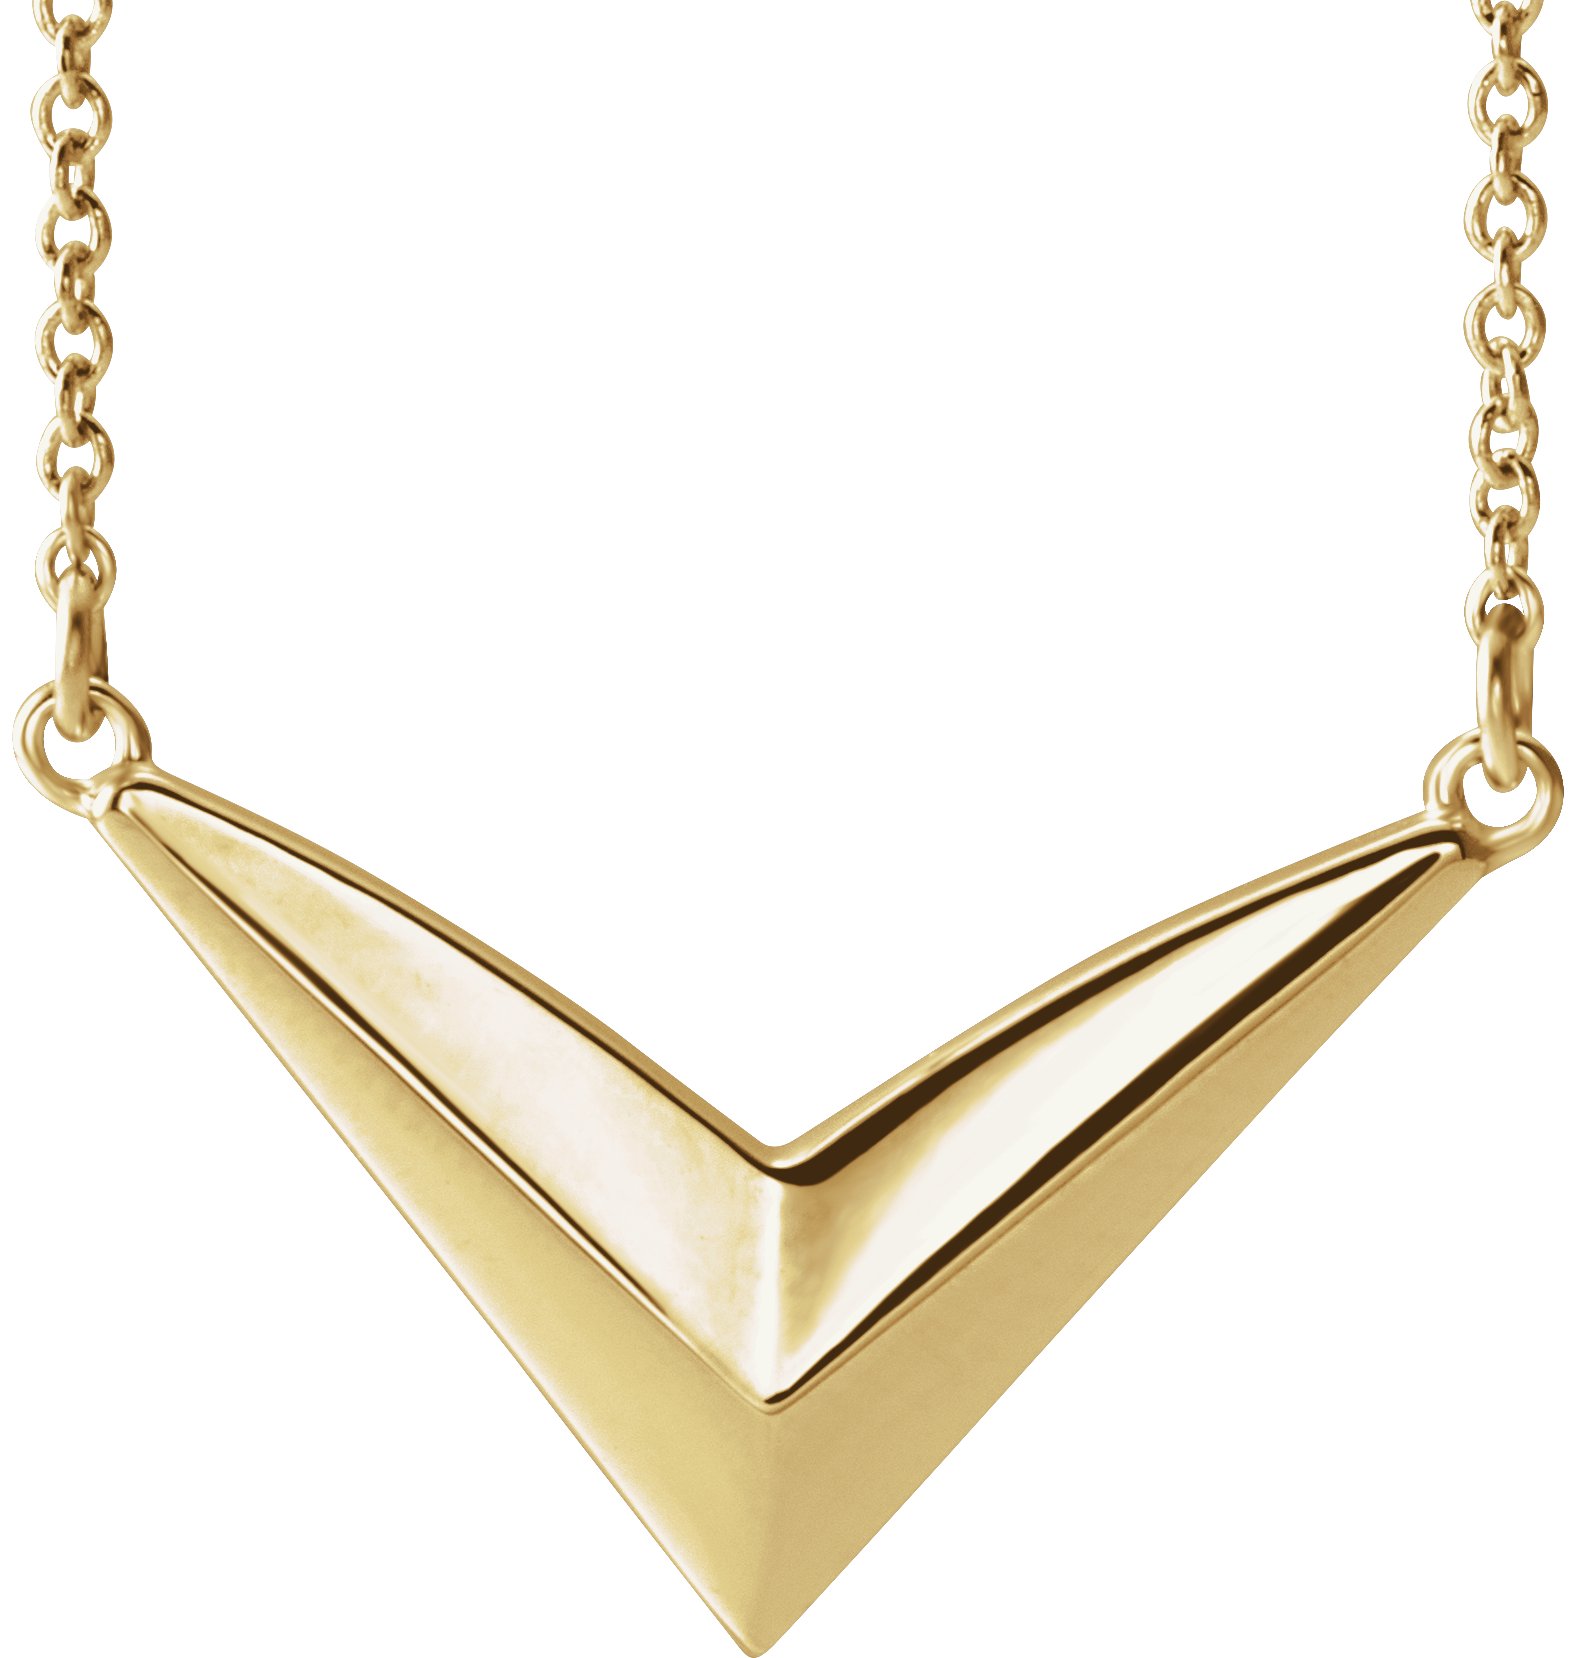 Louis Vuitton Goldtone Metal Essential V Necklace